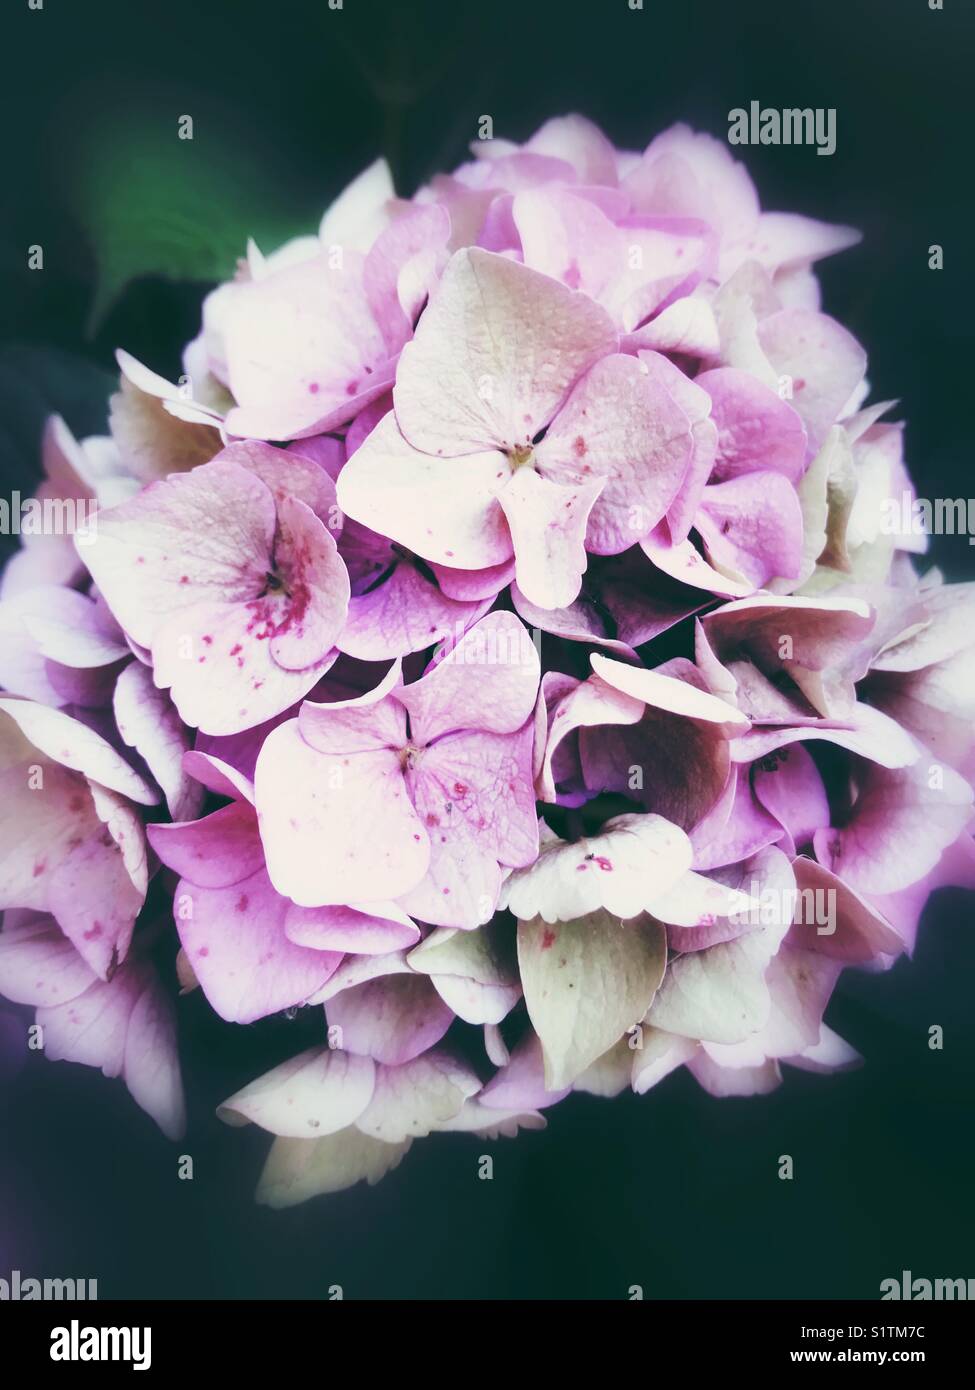 Rosa Hortensie Blumen Stockfoto